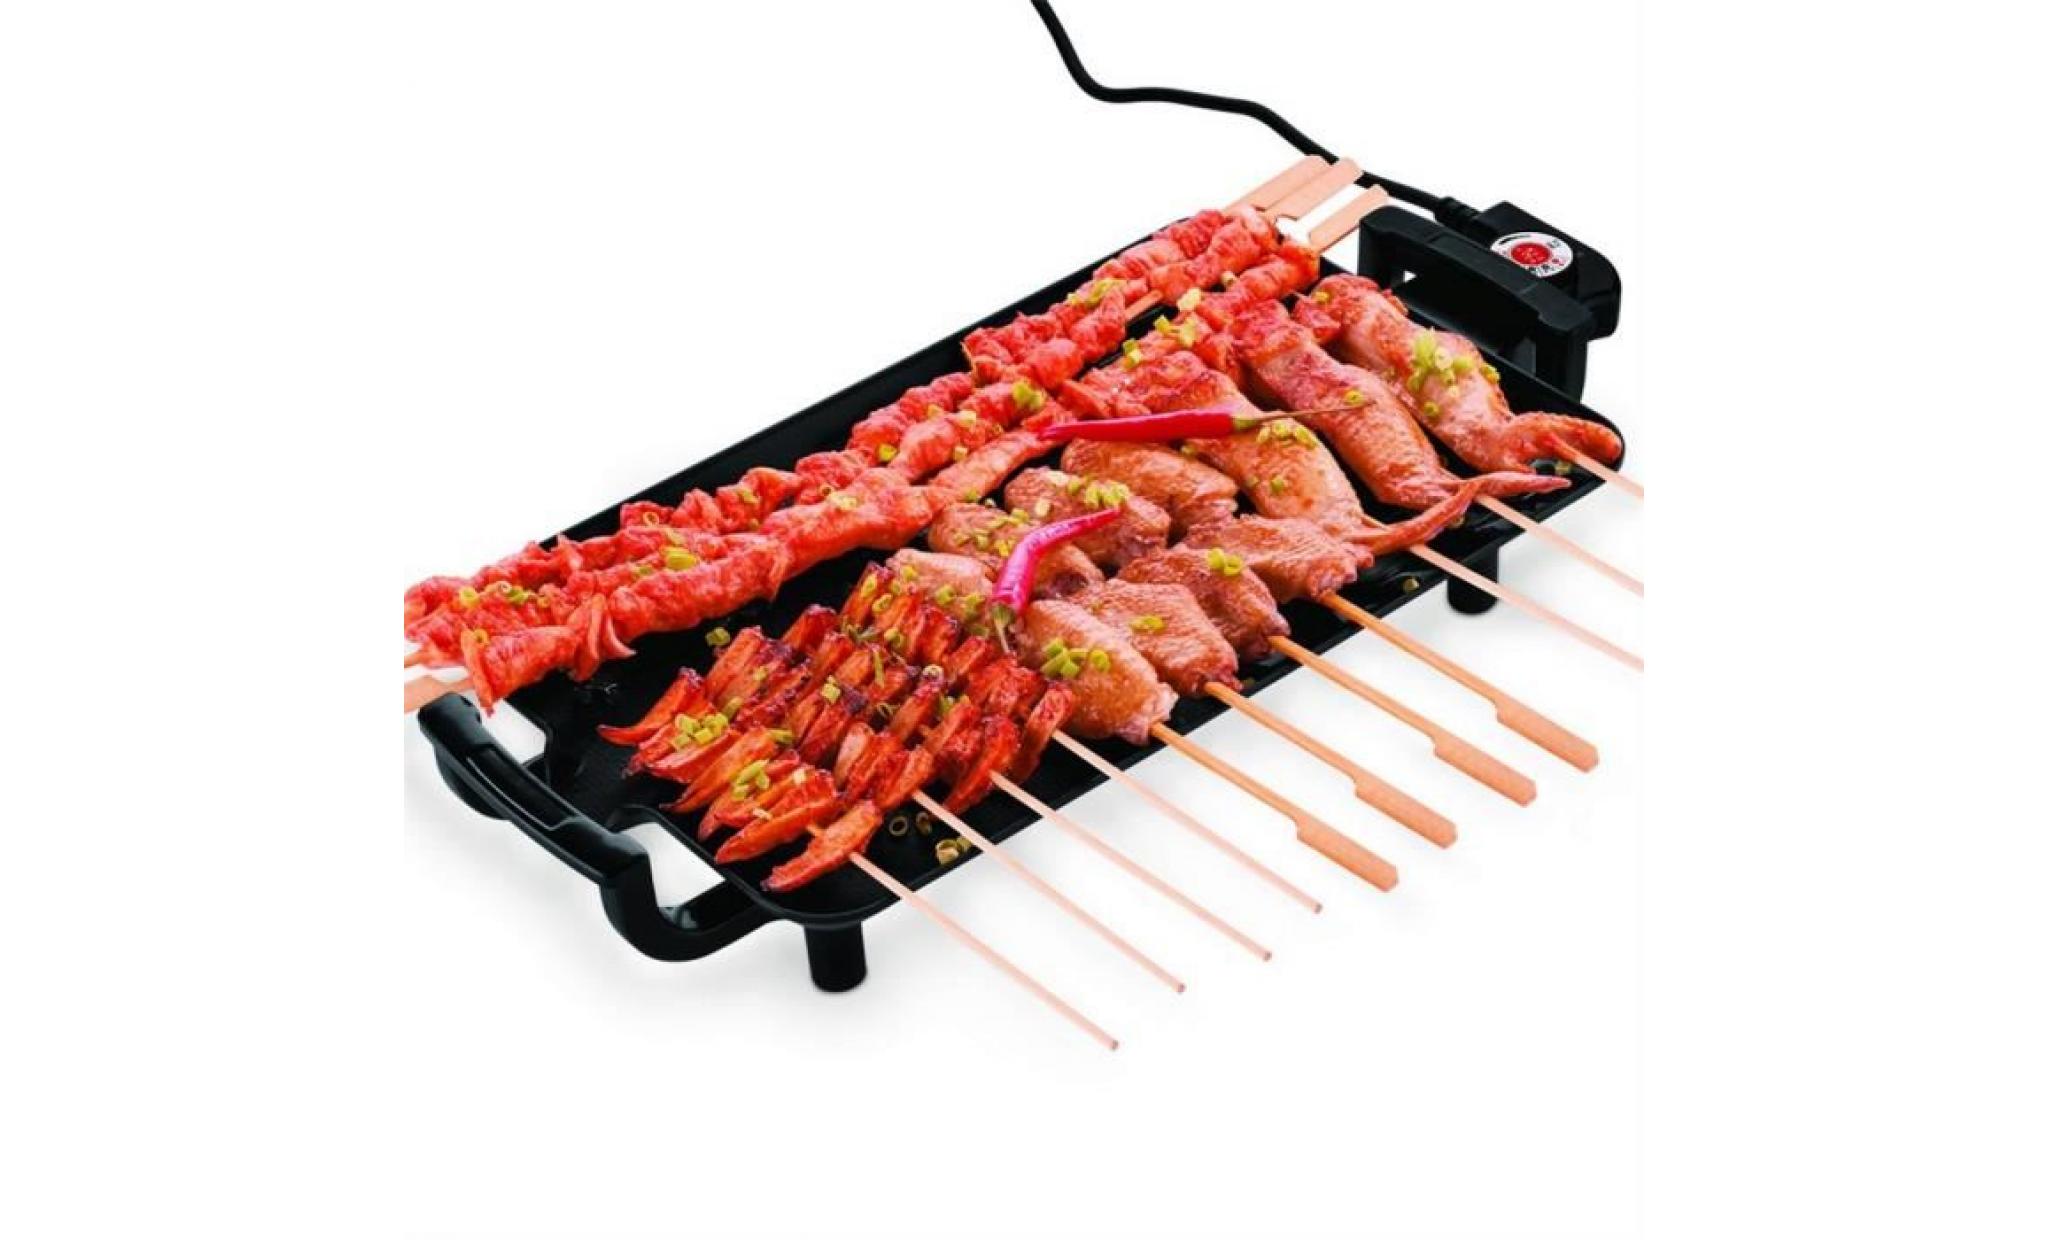 leshp® grille de barbecue   plaque de plancha plaque de cuisson électrique pour barbecue grille de table teppanyaki  400 * 230 *